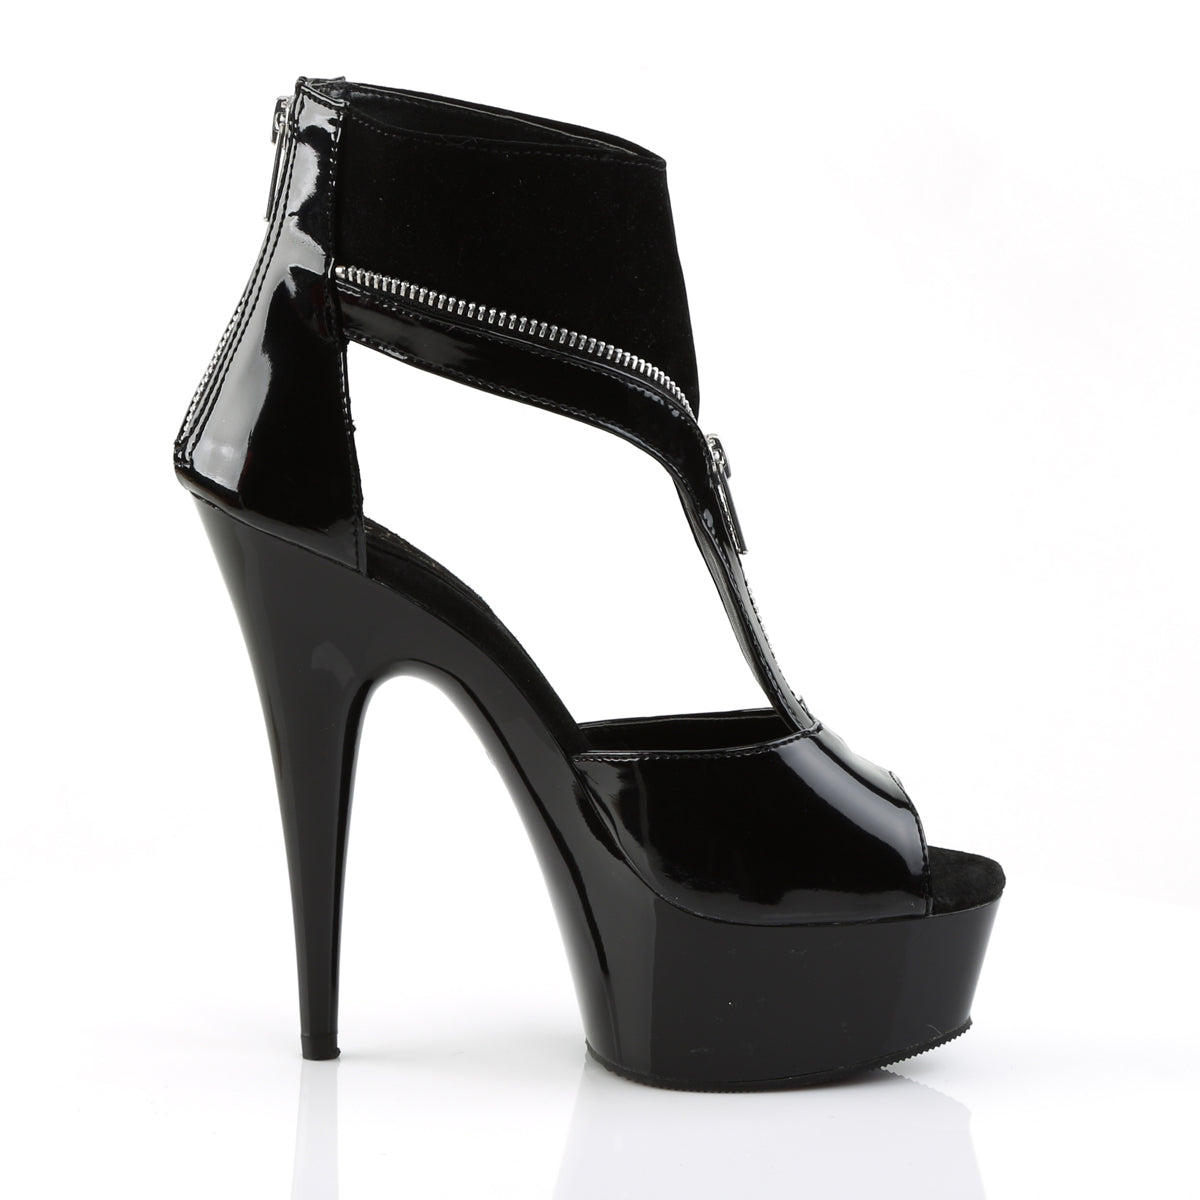 DELIGHT-690 Pleaser 6 Inch Heel Black Pole Dancing Platforms-Pleaser- Sexy Shoes Fetish Heels